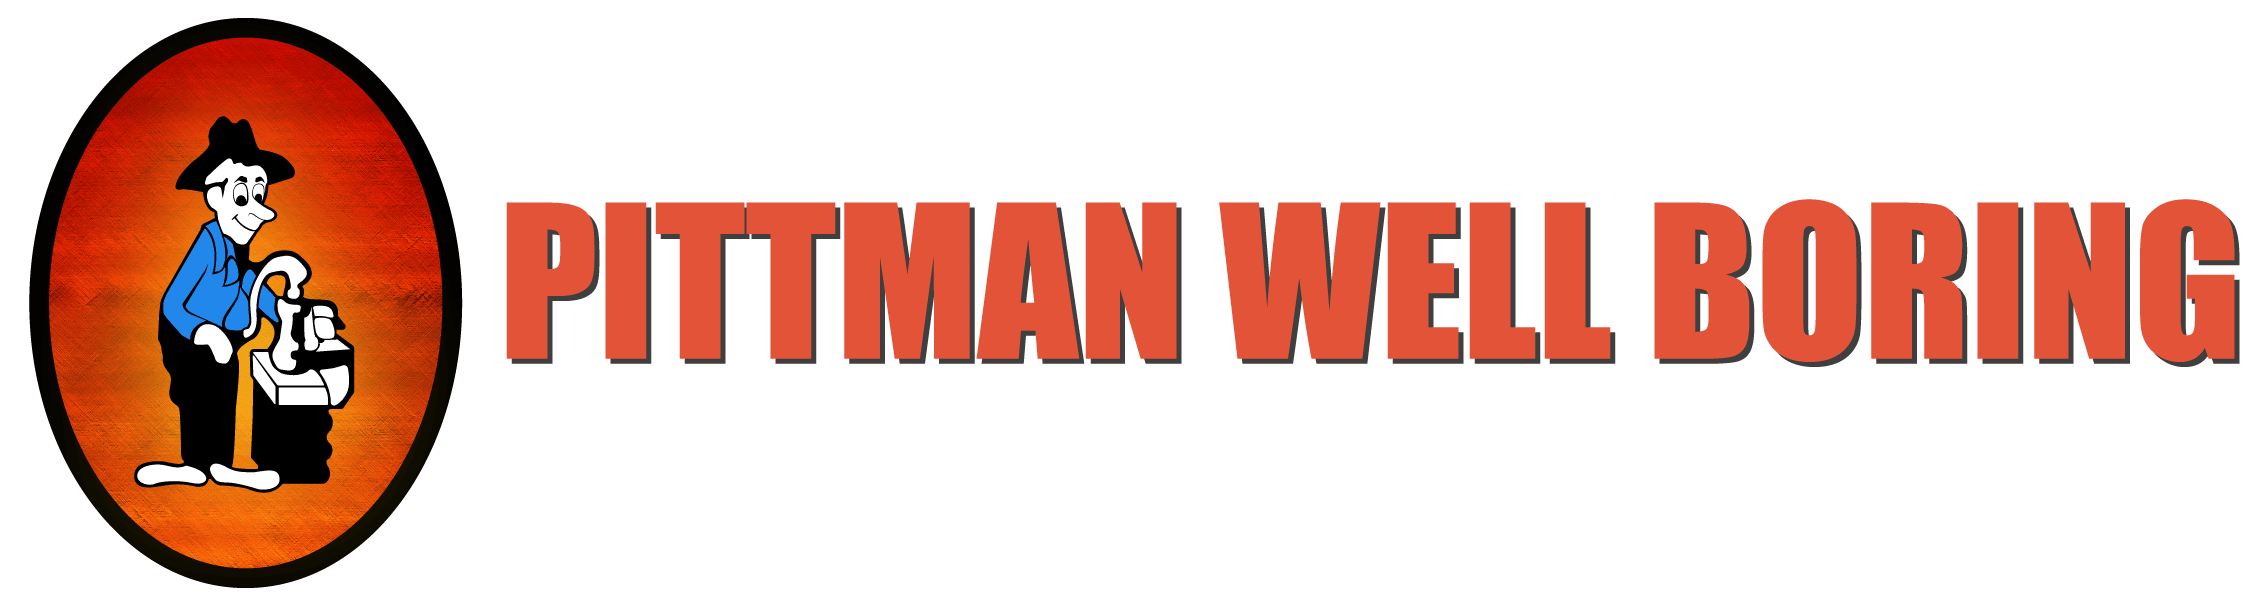 Pittman Well Boring logo